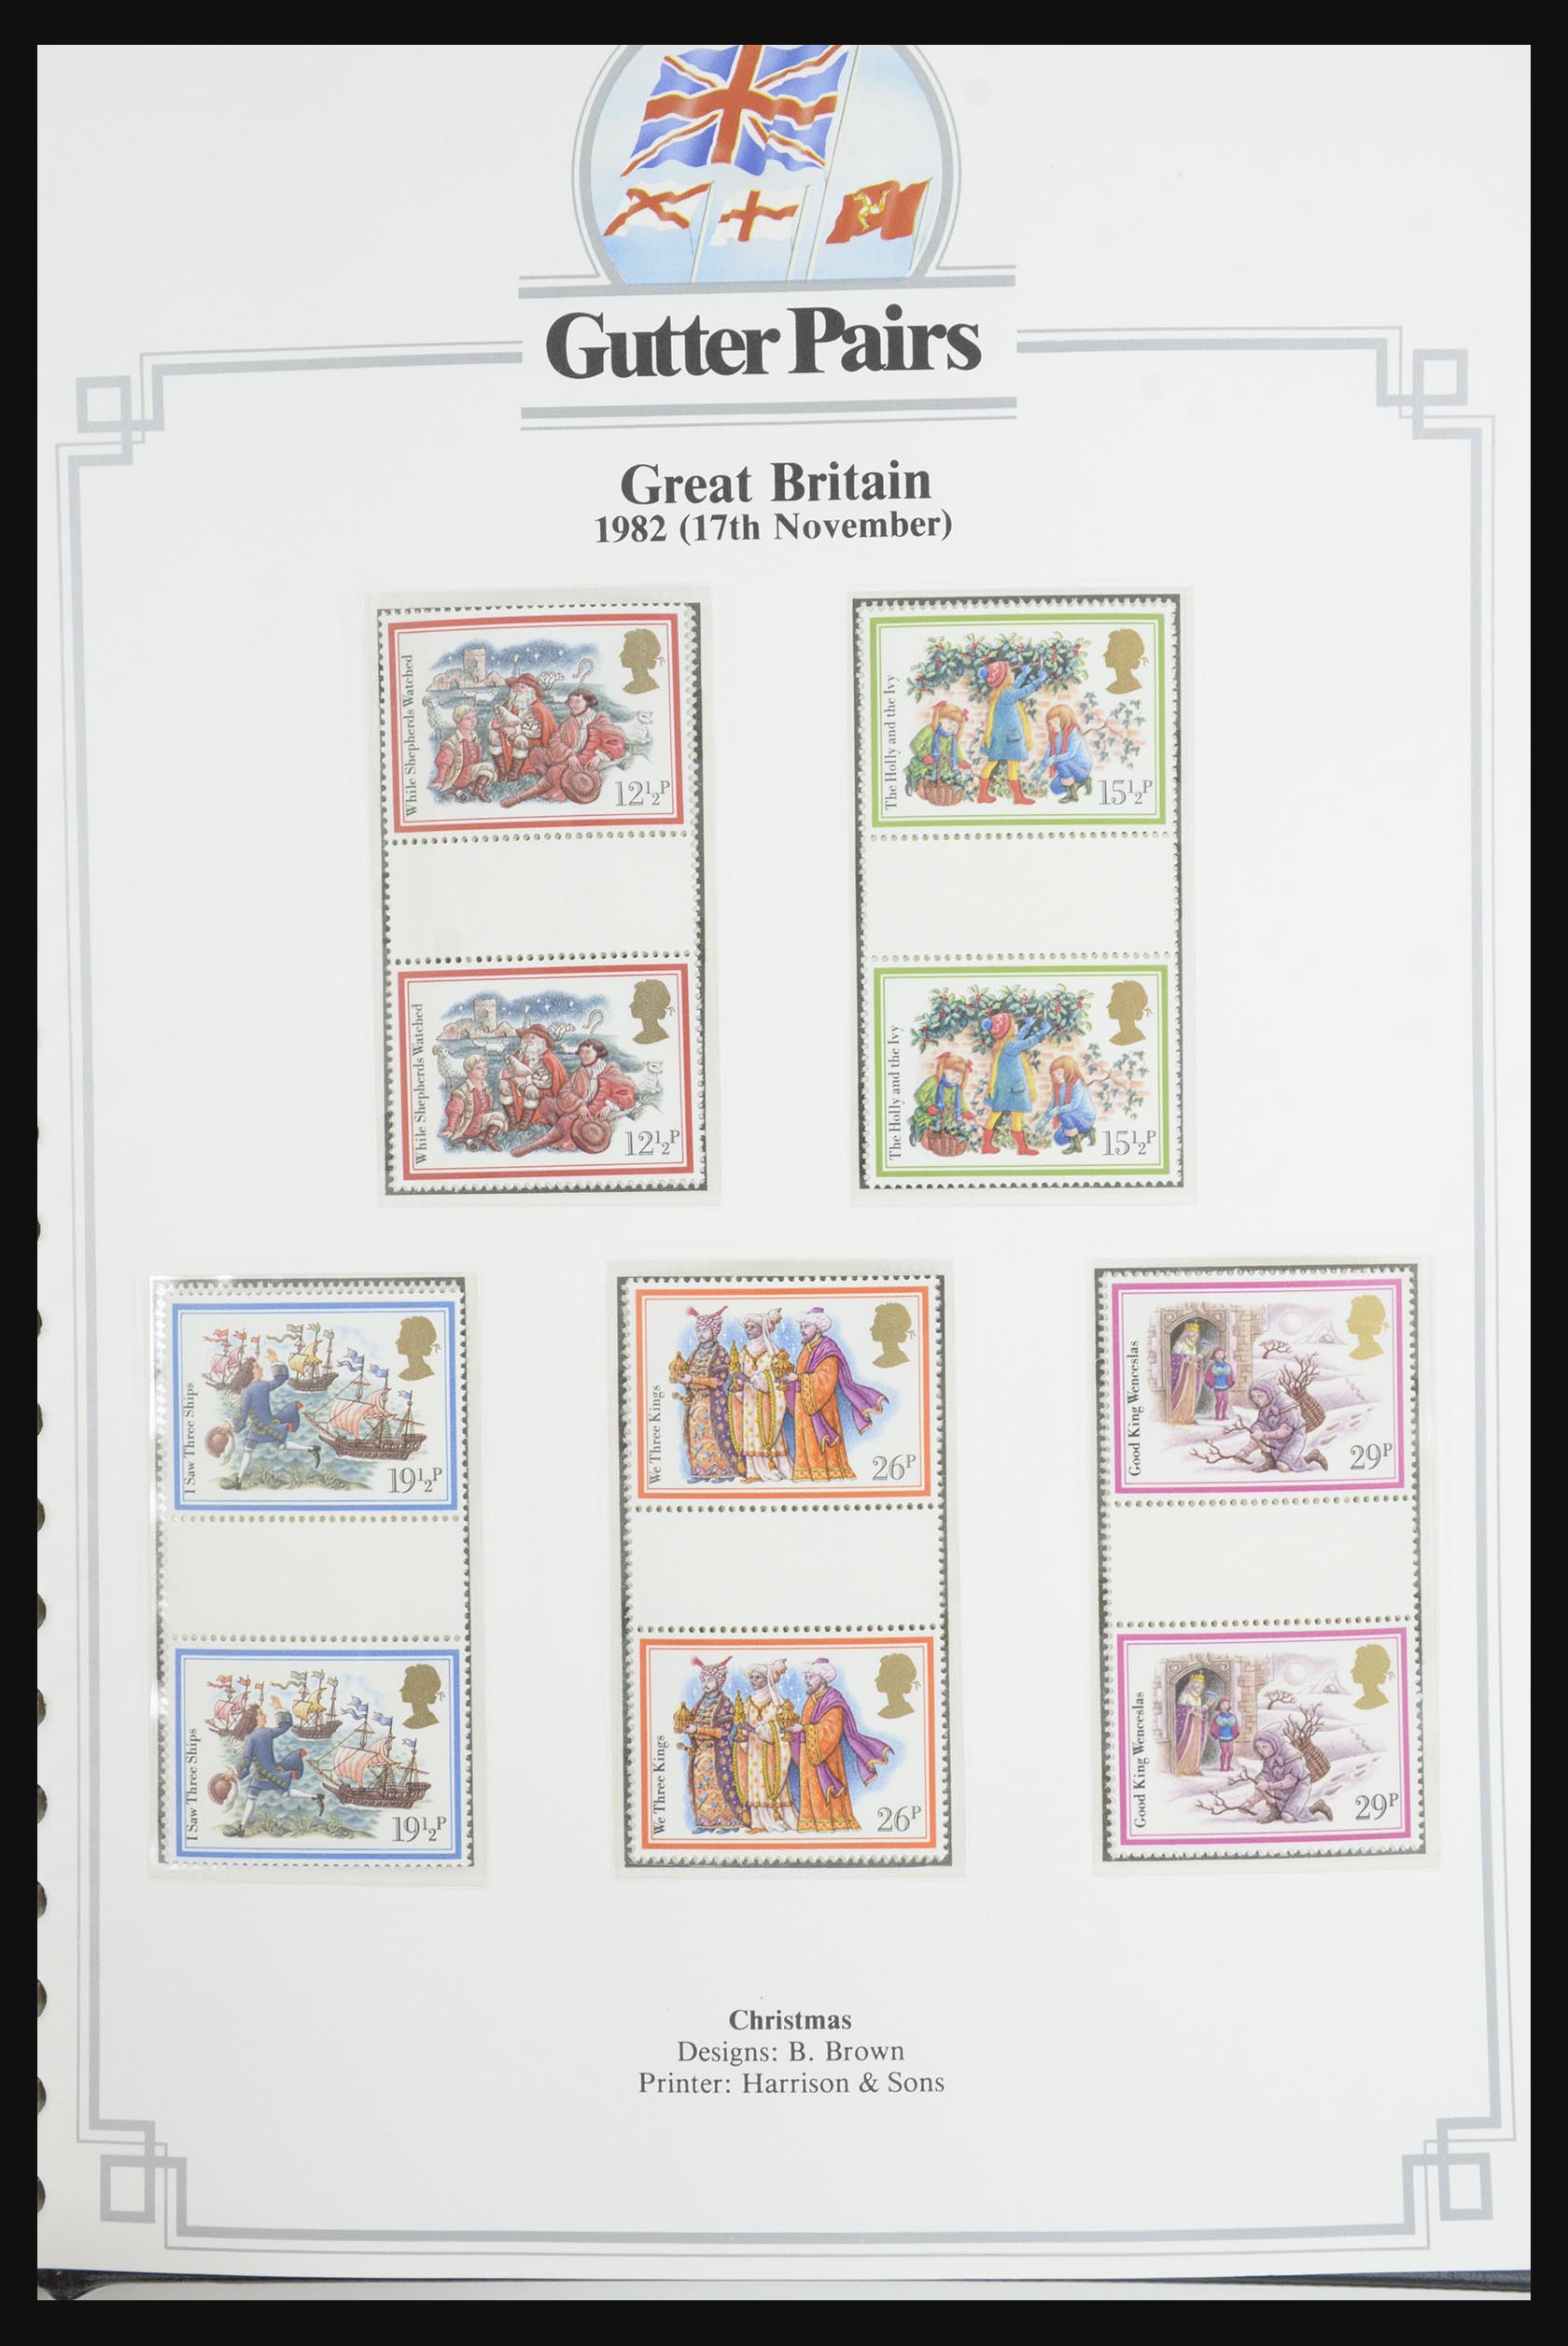 31717 034 - 31717 Great Britain gutterpairs 1976-1991.